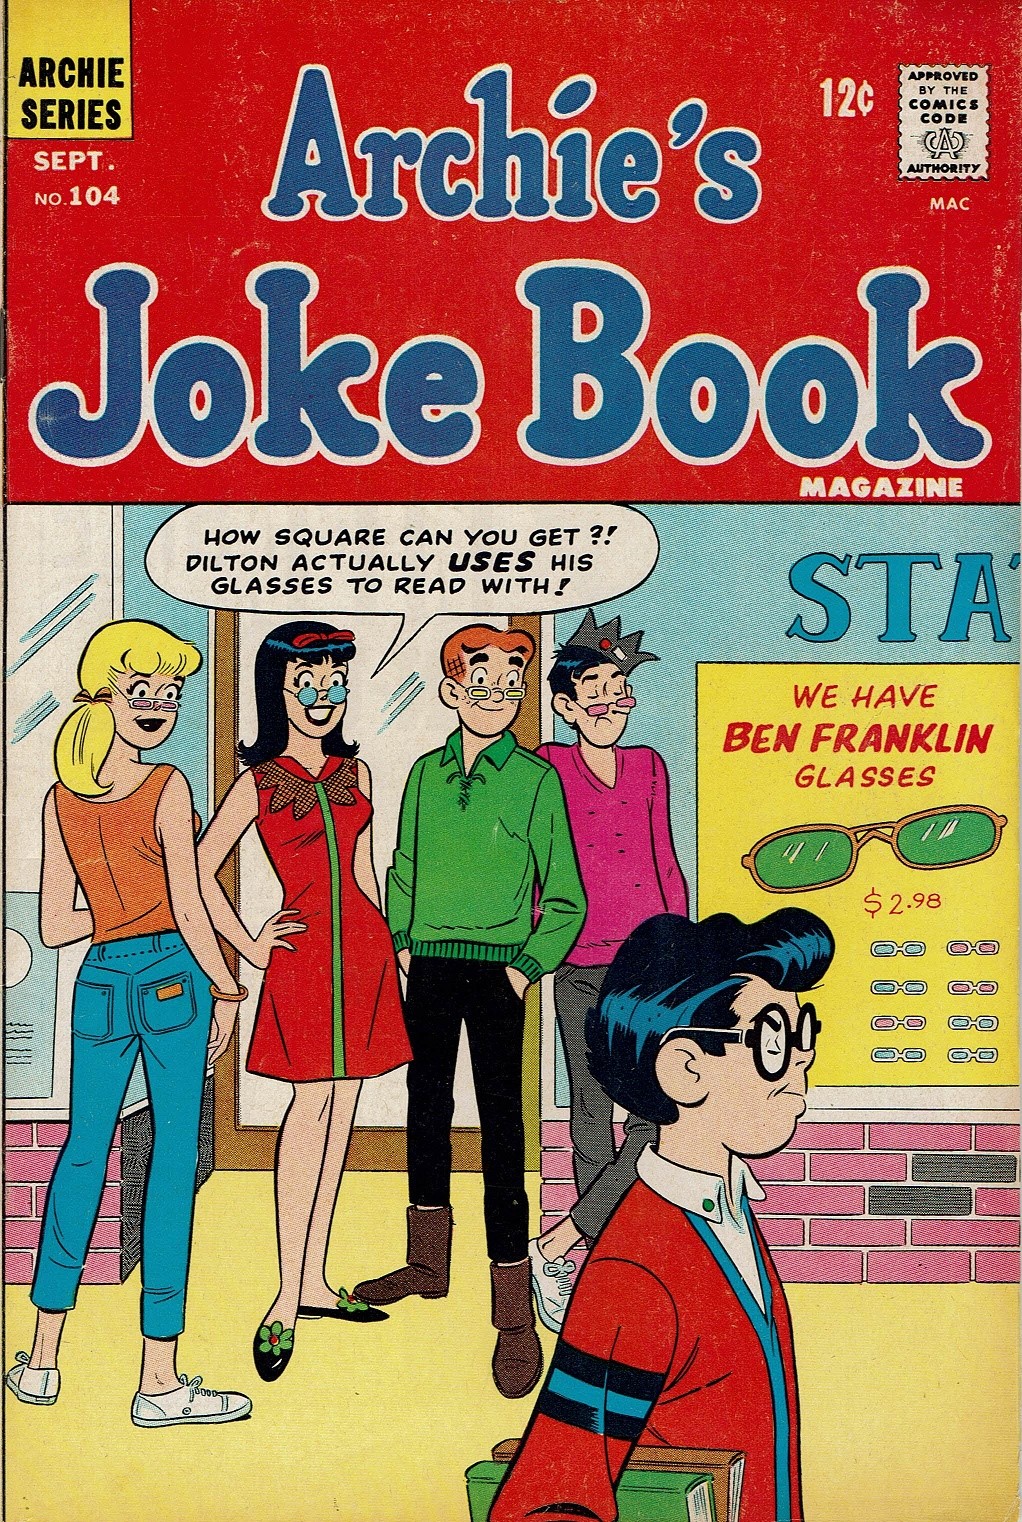 Archie's Joke Book Magazine issue 104 - Page 1